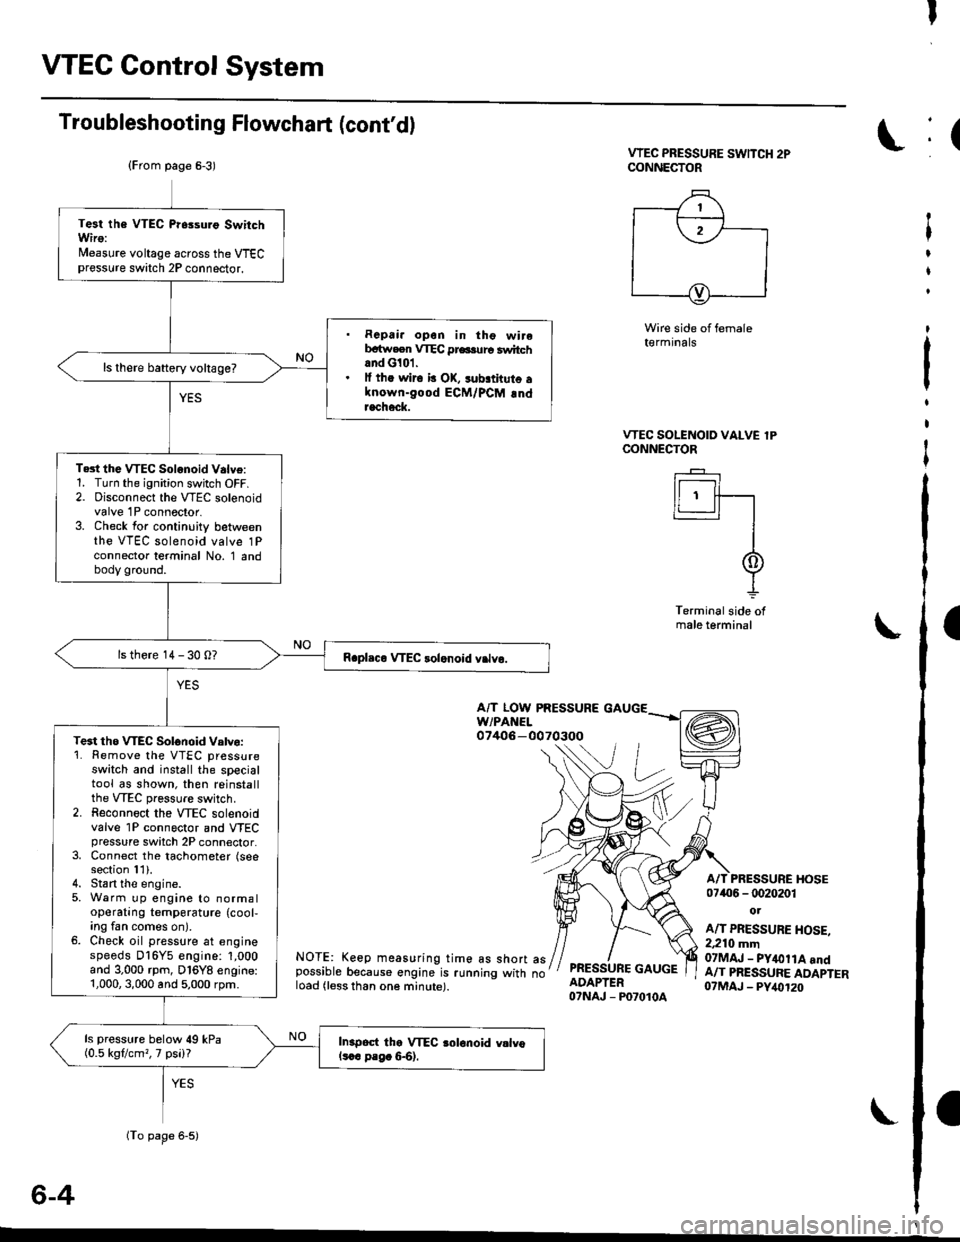 HONDA CIVIC 1997 6.G Workshop Manual I
VTEC Control System
Troubleshooting Flowchart (contd)
VTEC PRESSURE SwlTCH 2PCONNECTOR
Wire side of female(€rmrnats
VTEC SOLENOID VALVE lPCONNECTOR
I r----t I
ll  ff---r�-�1
I
I
-L
Terminal s